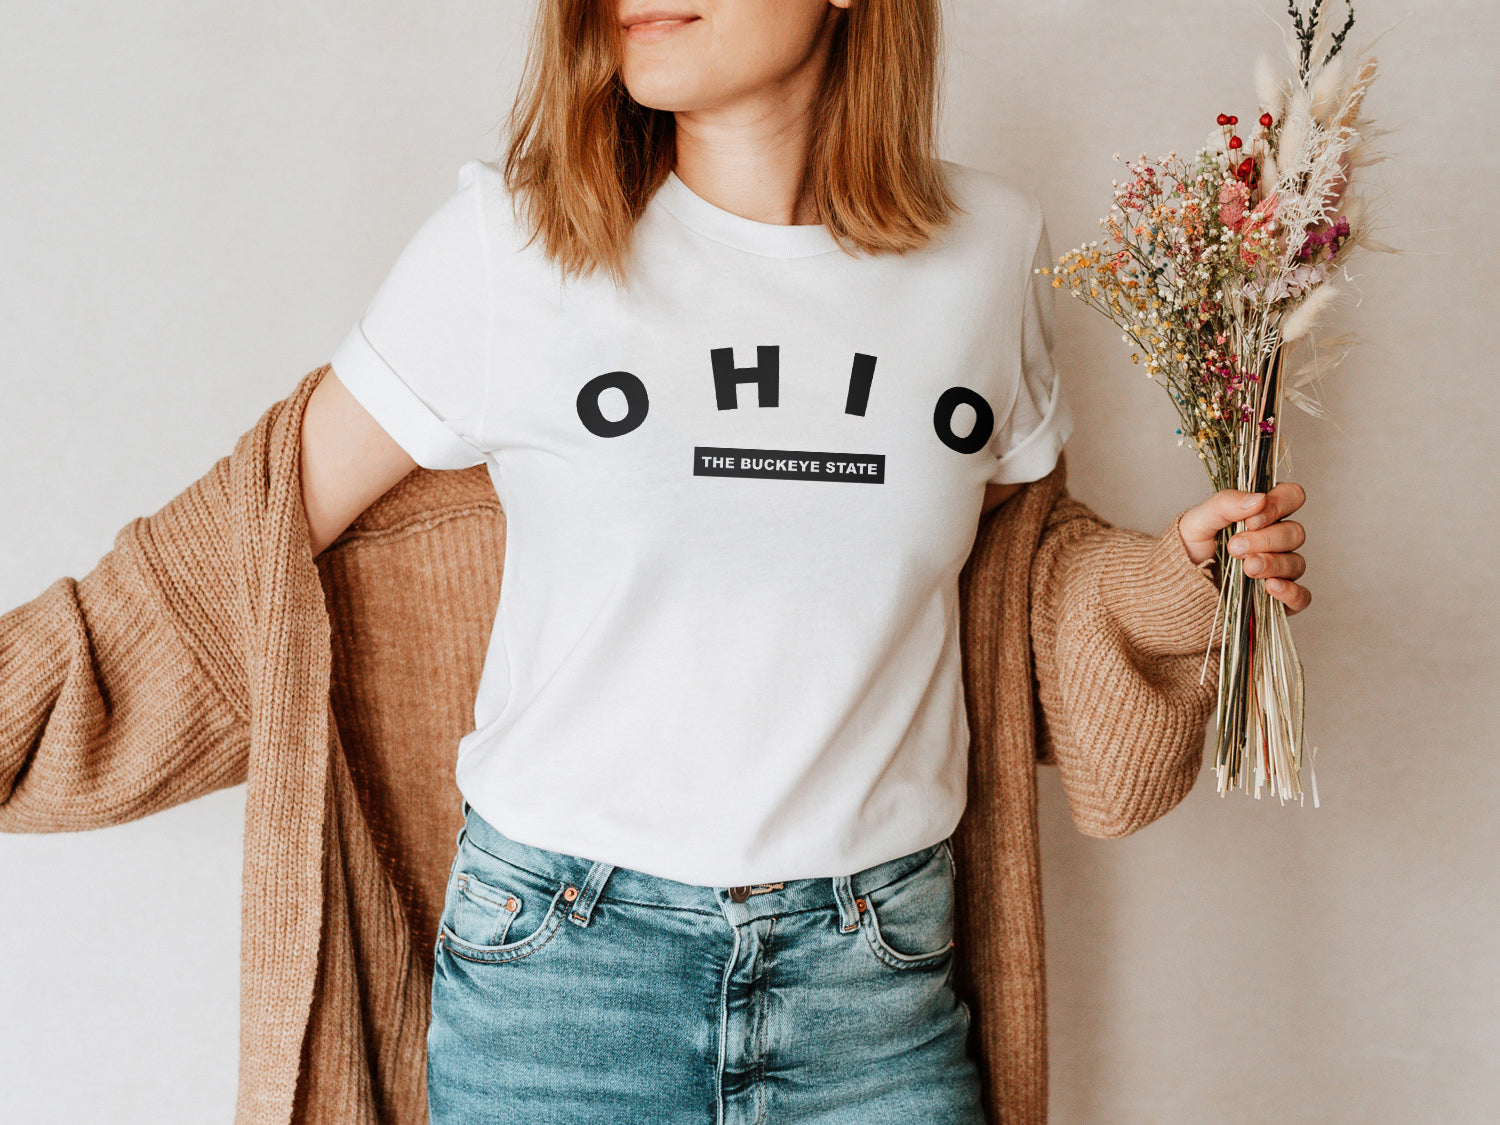 Ohio The Buckeye State T-shirt - United States Name & Slogan Minimal Design Printed Tee Shirt